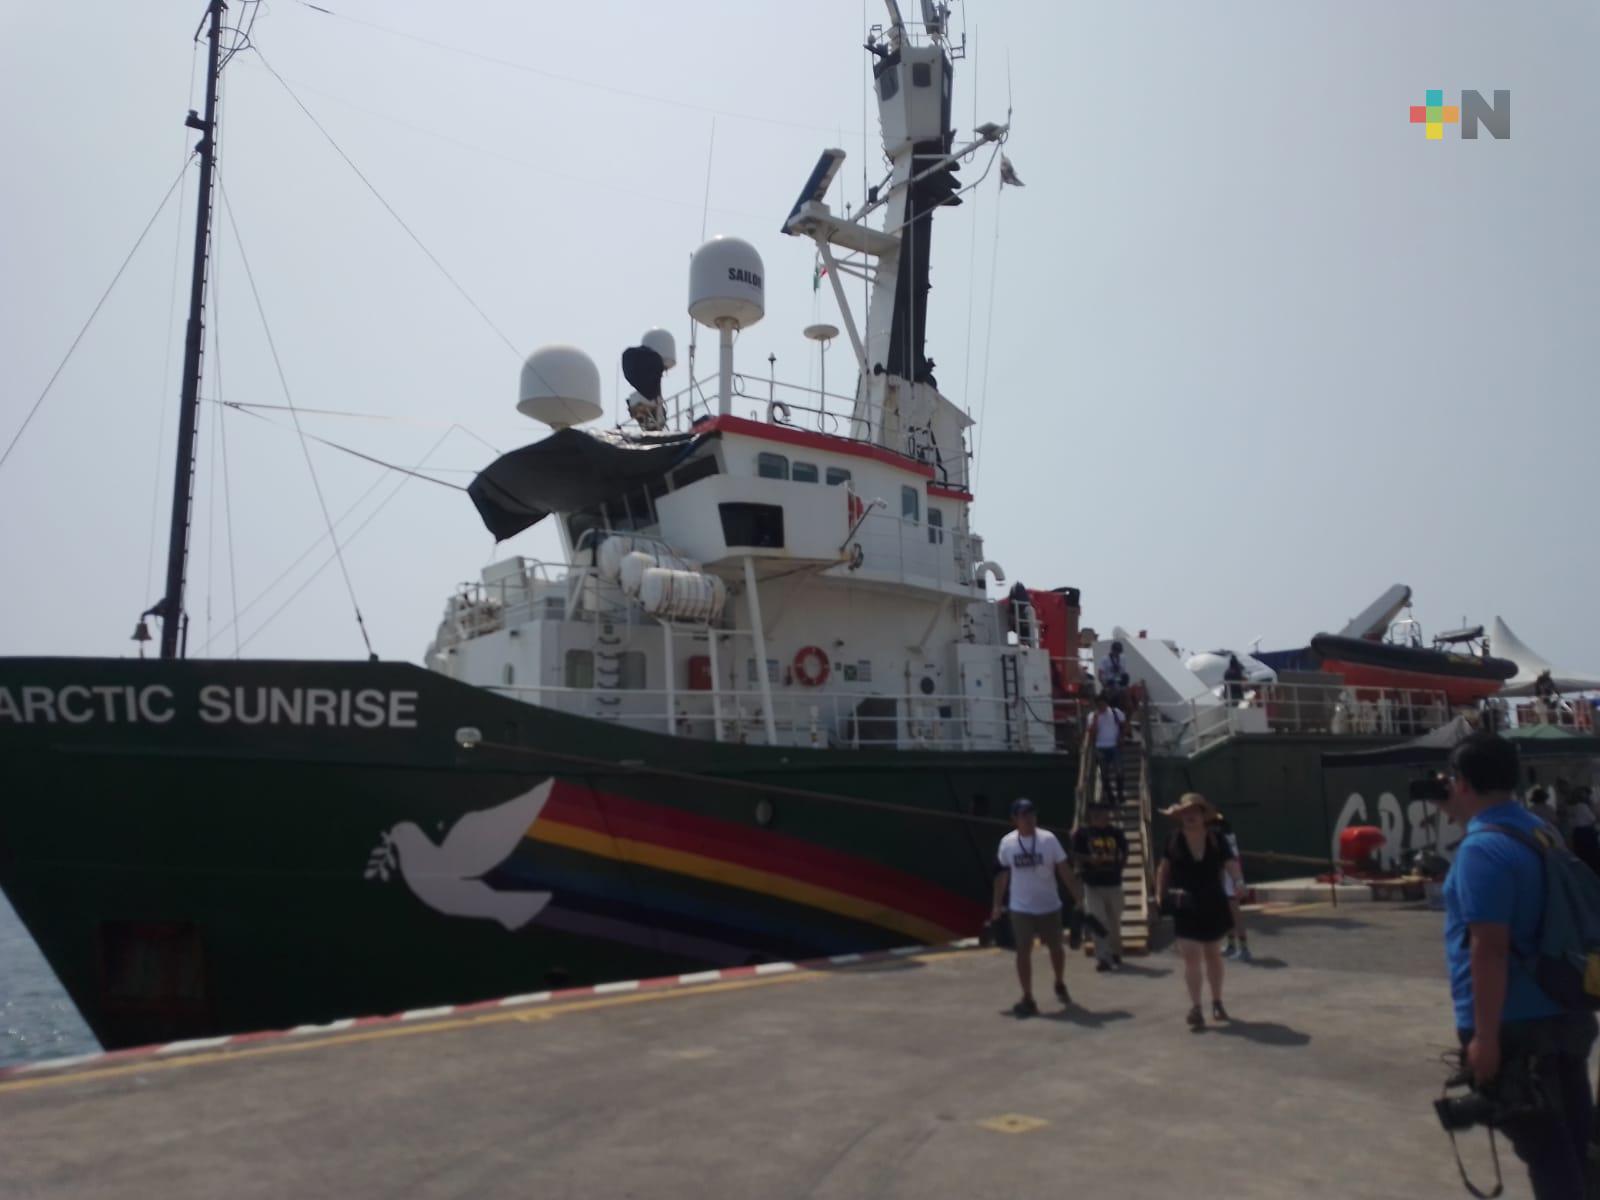 A partir del jueves, el barco Artic Sunshine de Greenpeace abrirá puertas a visitantes